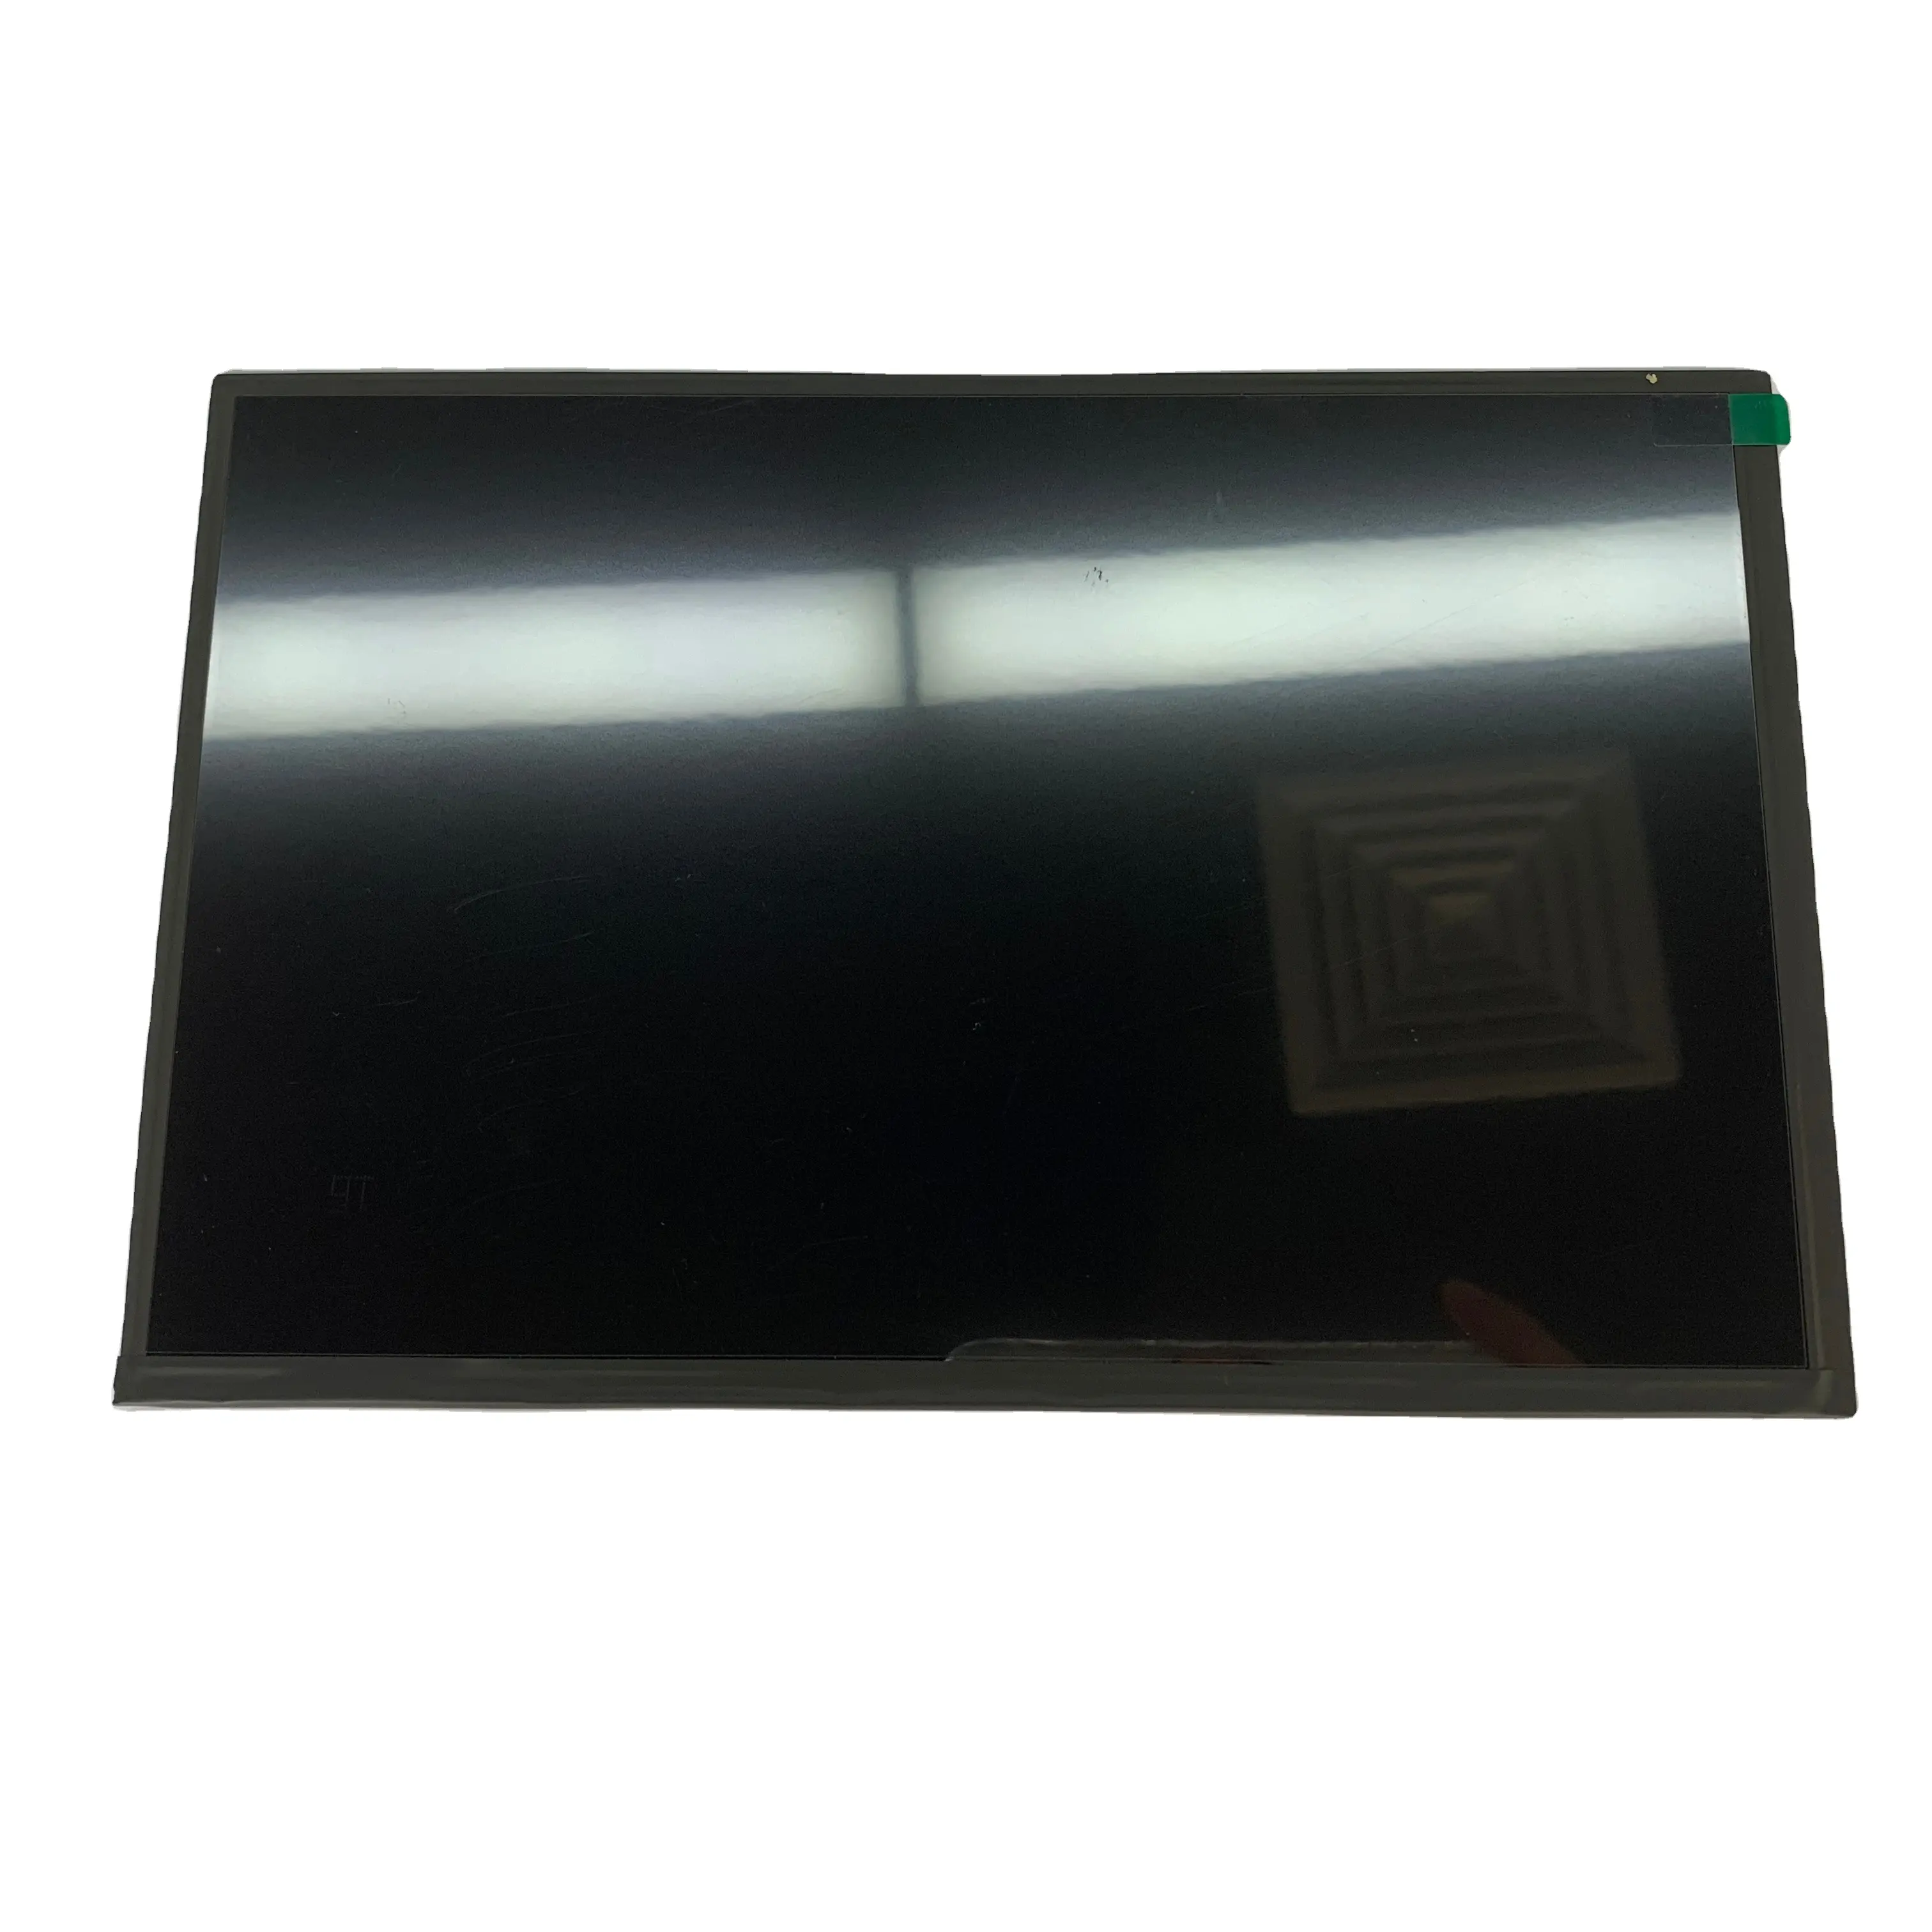 Lcd ekran uzman üreticileri 10.1 inç LVDS TFT şanzıman tam aktif görünüm CTP ile 1920 * RGB * 1200